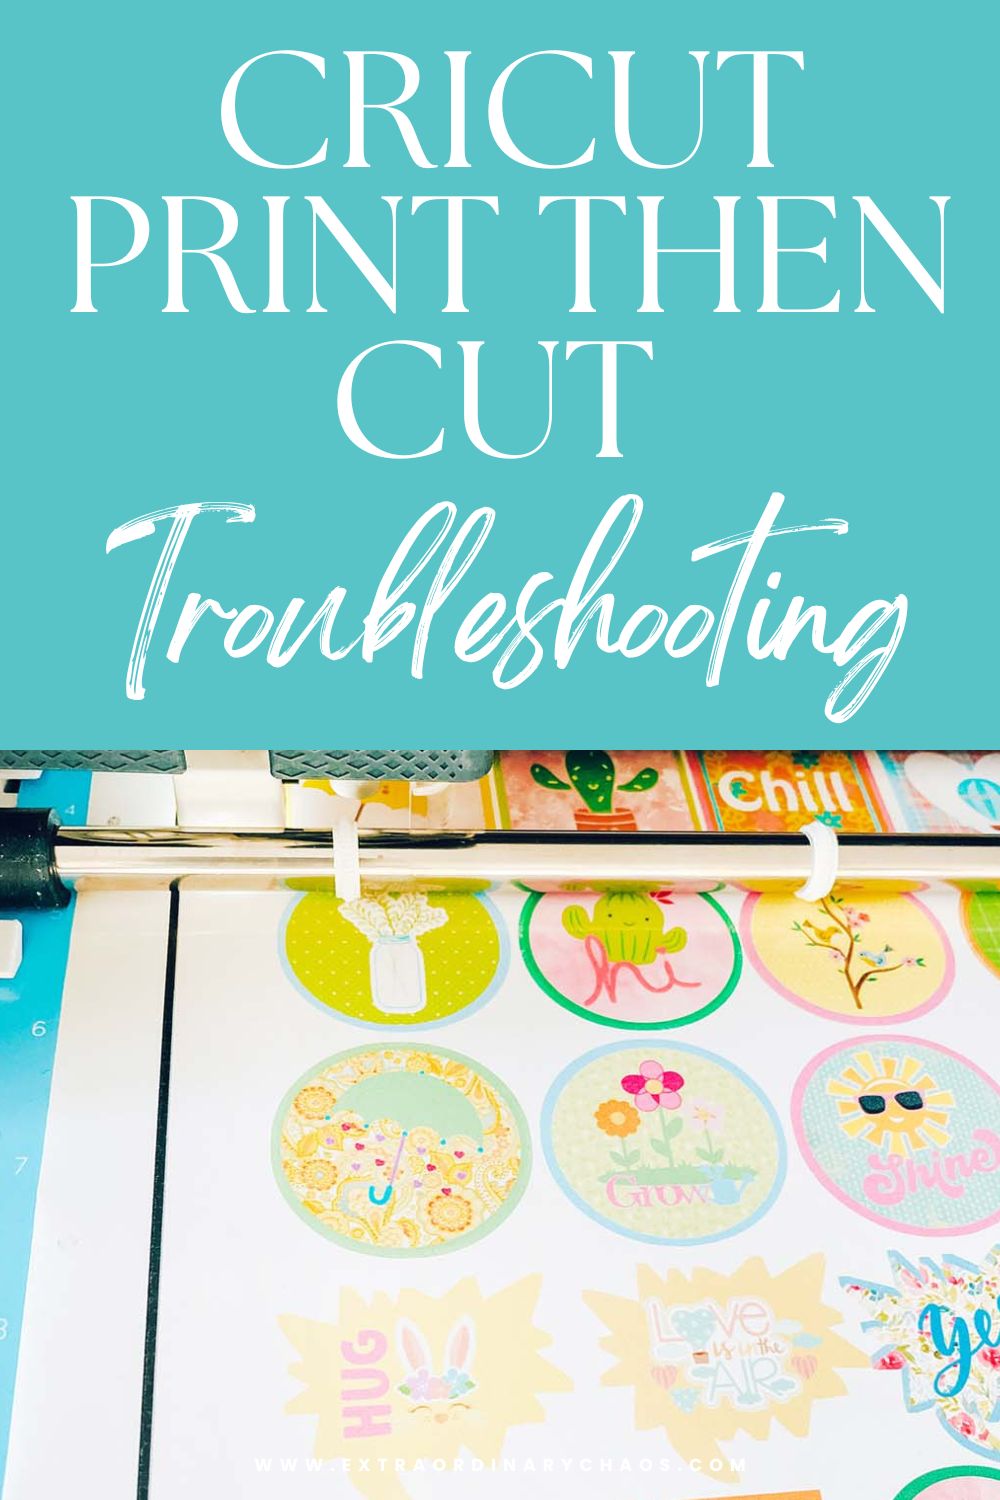 Cricut Print then cut troubleshooting